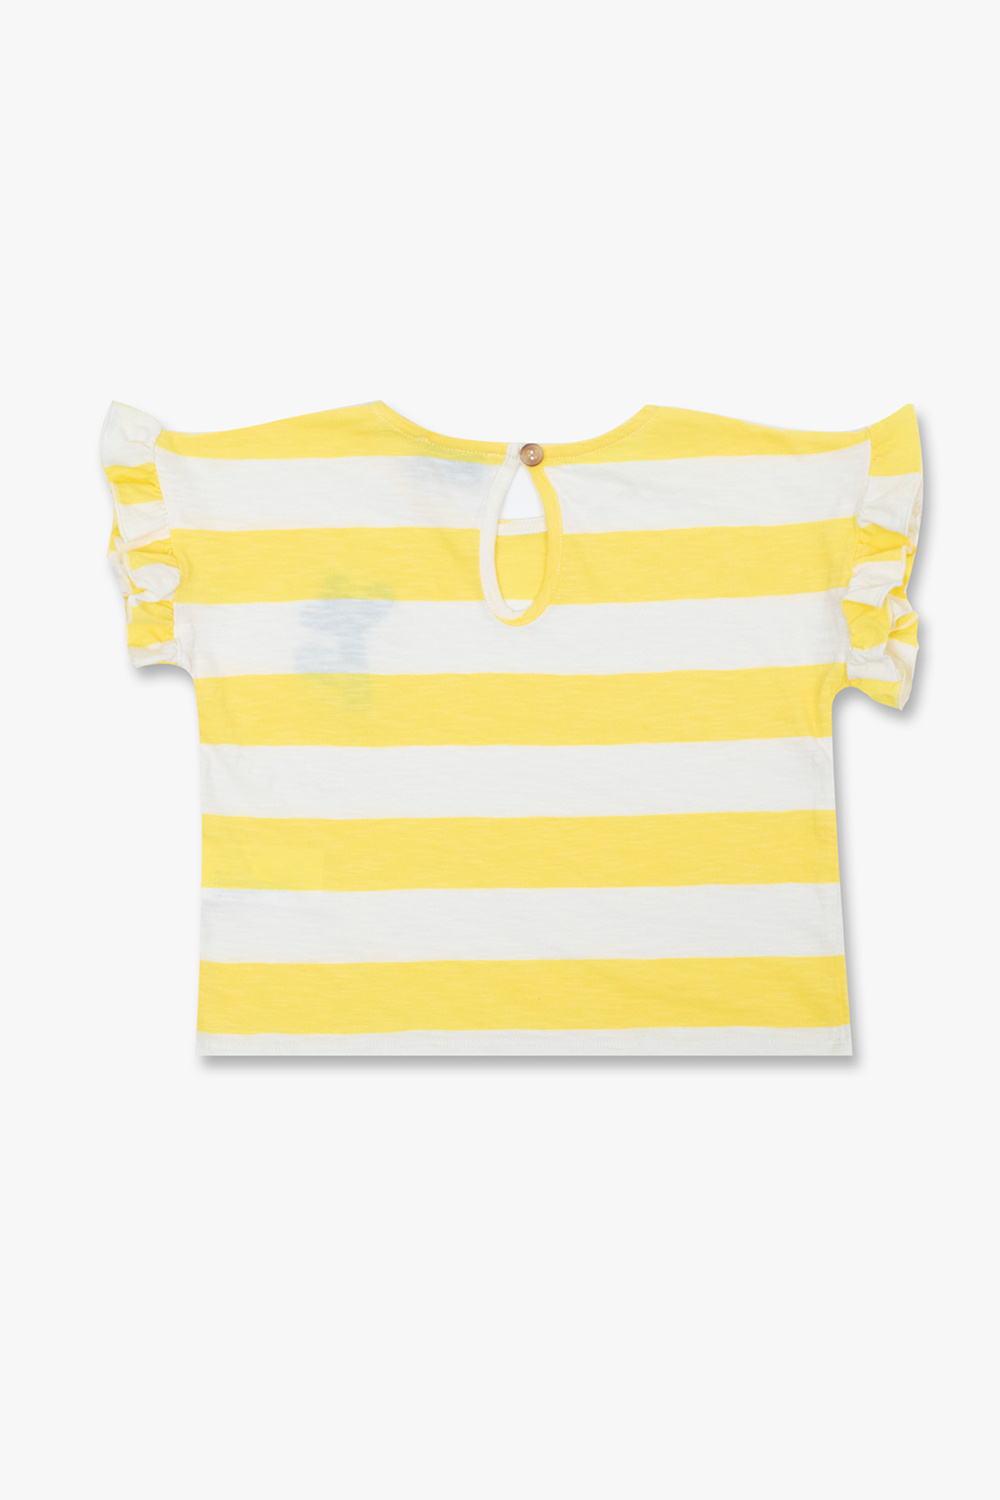 Bobo Choses Striped T-shirt